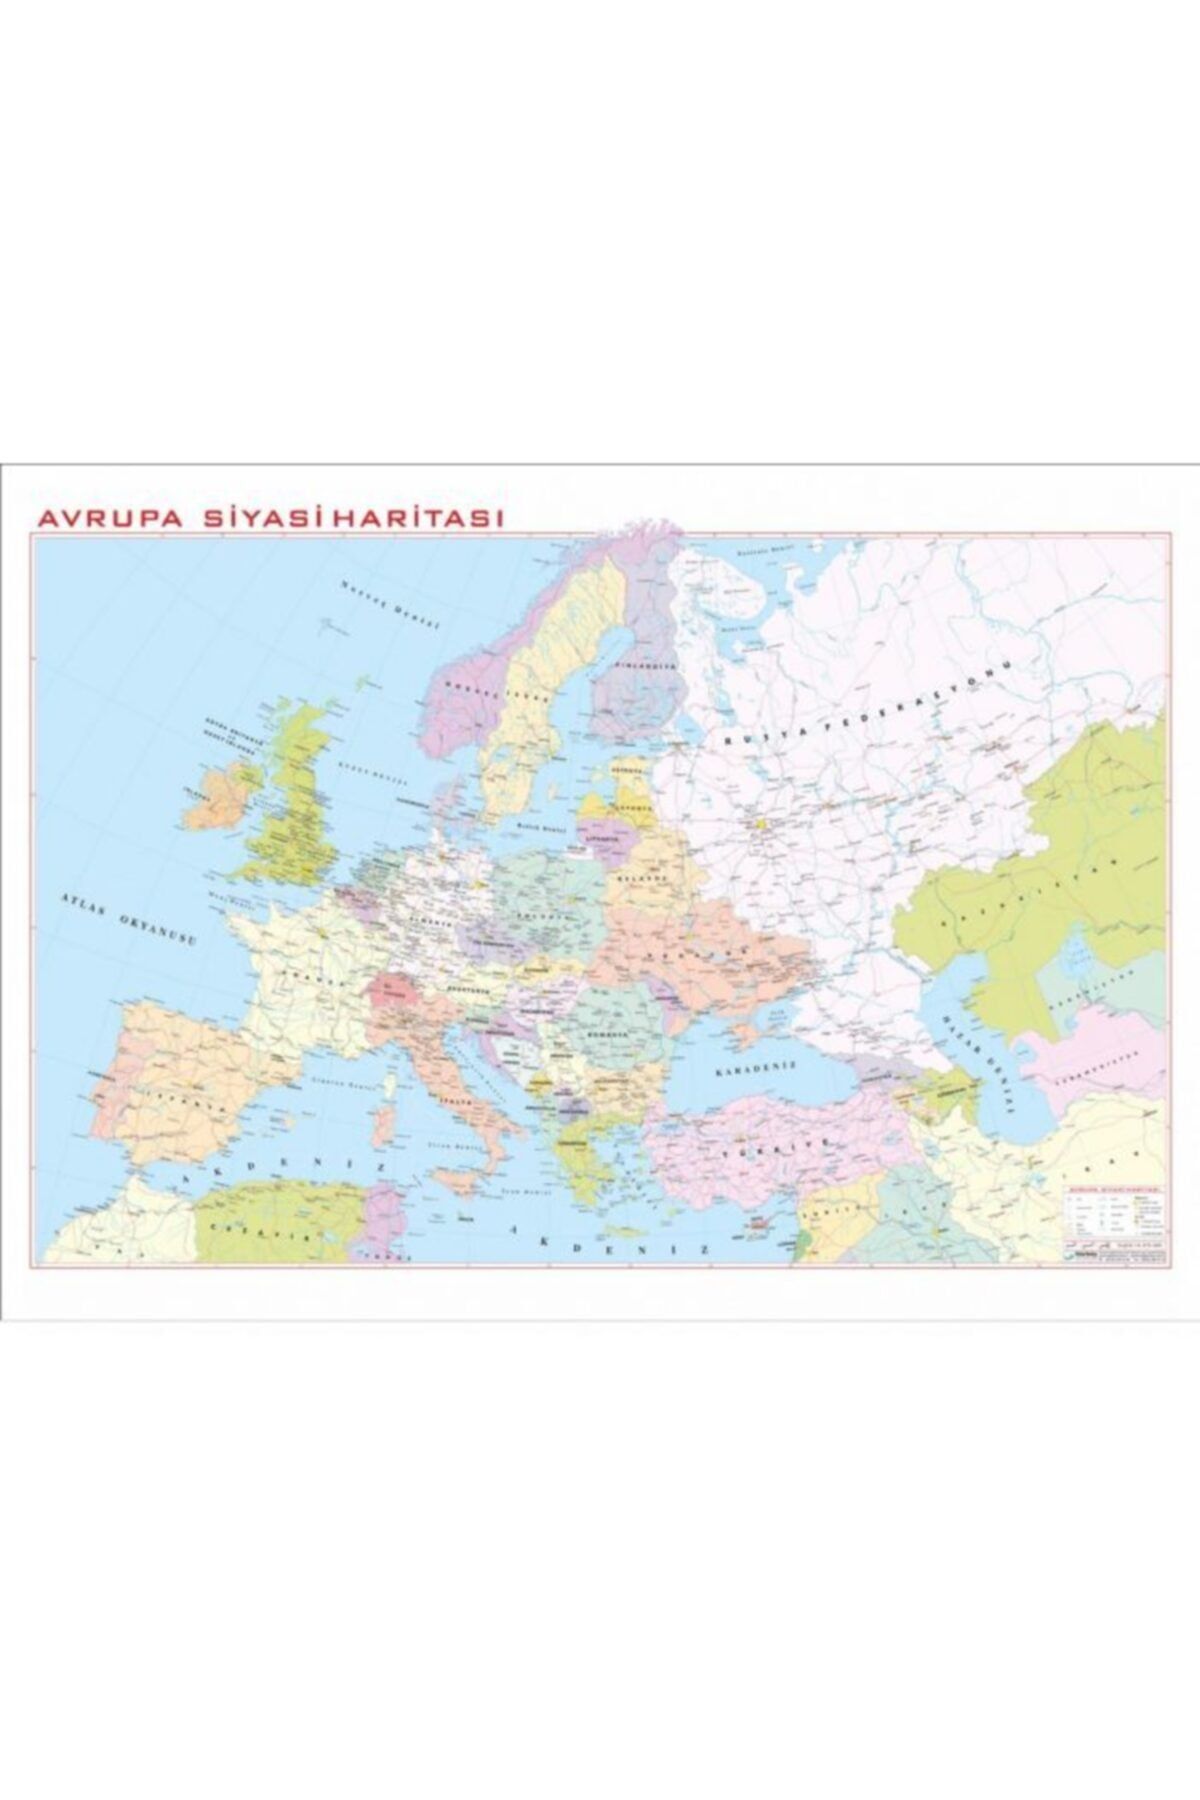 G Rb Z Yay Nlar Avrupa Siyasi Karayollar Haritas Fiyat